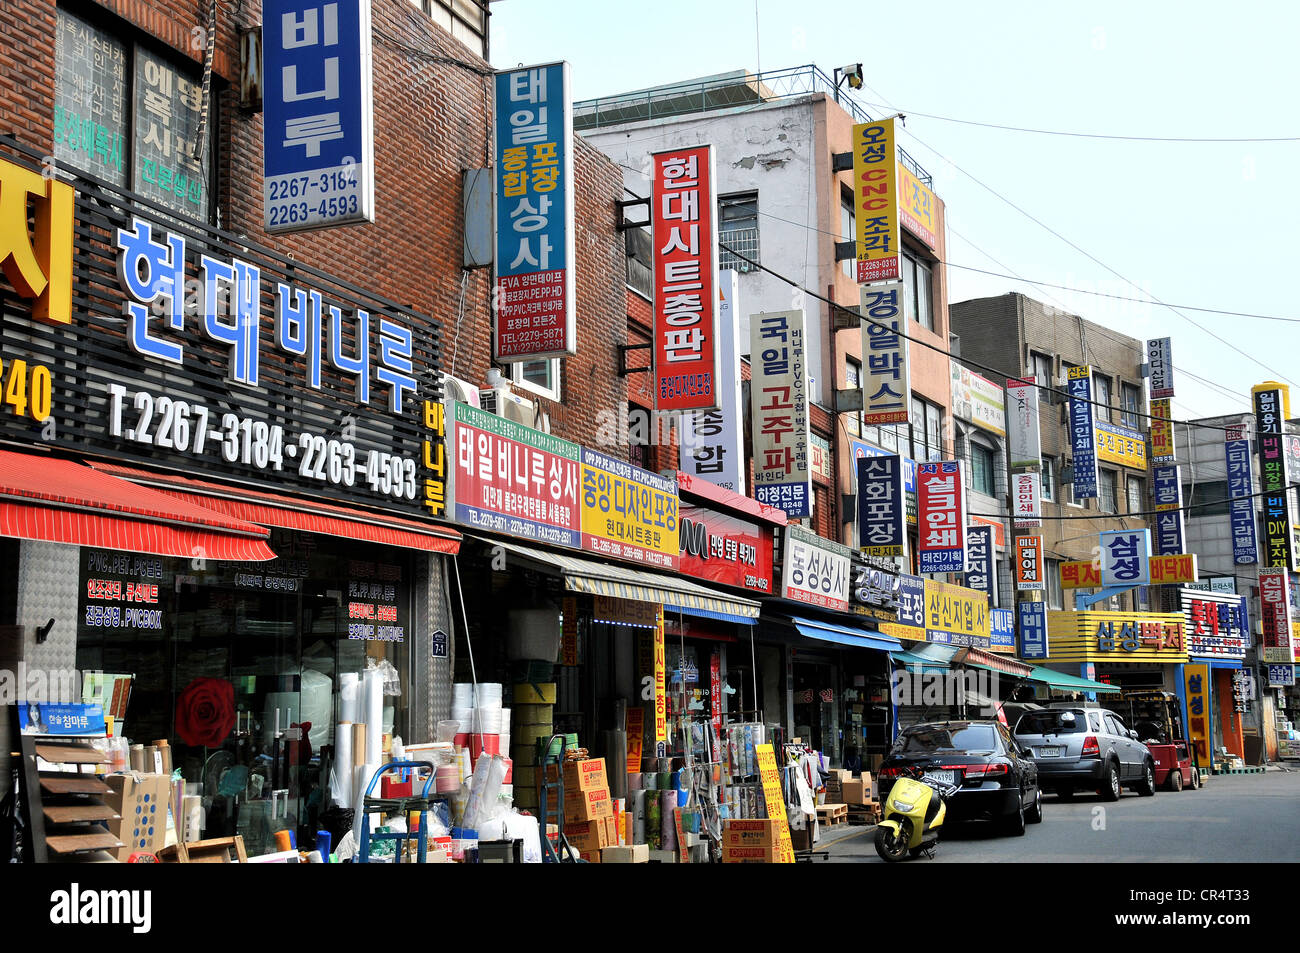 street scene Uljiro 4 Seoul South Korea Stock Photo